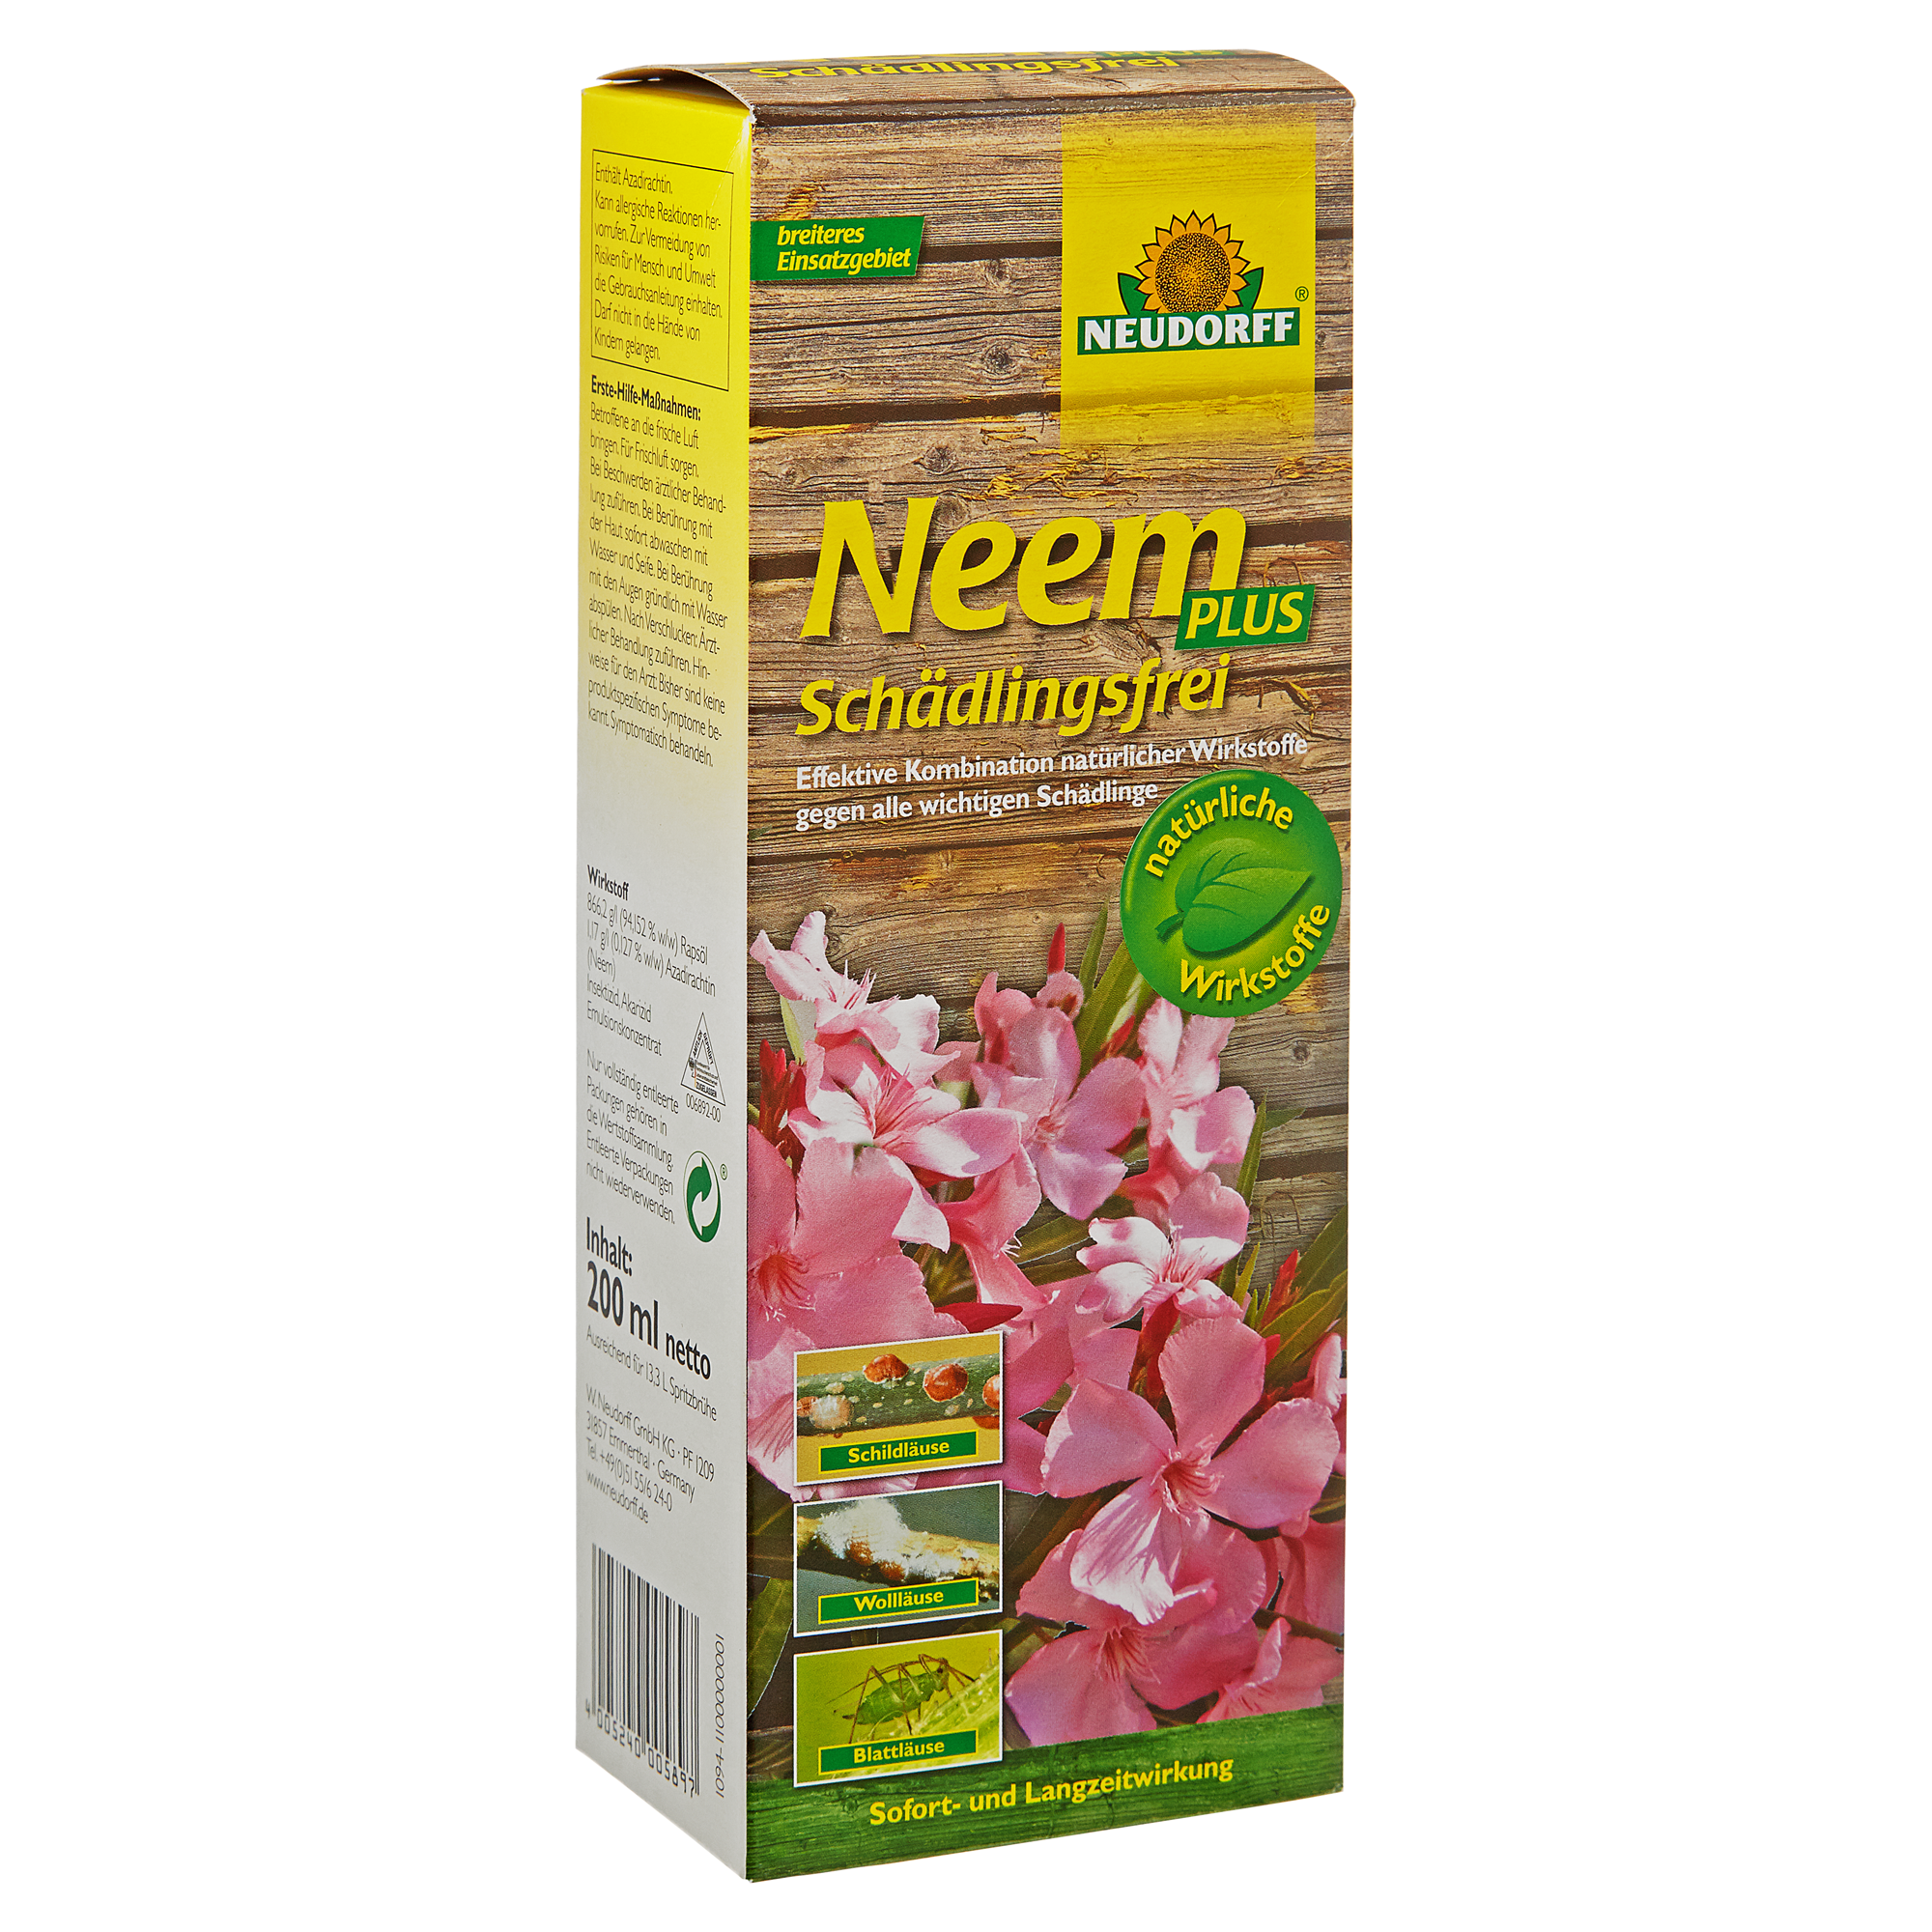 Schädlingsfrei 'Neem Plus' 200 ml + product picture